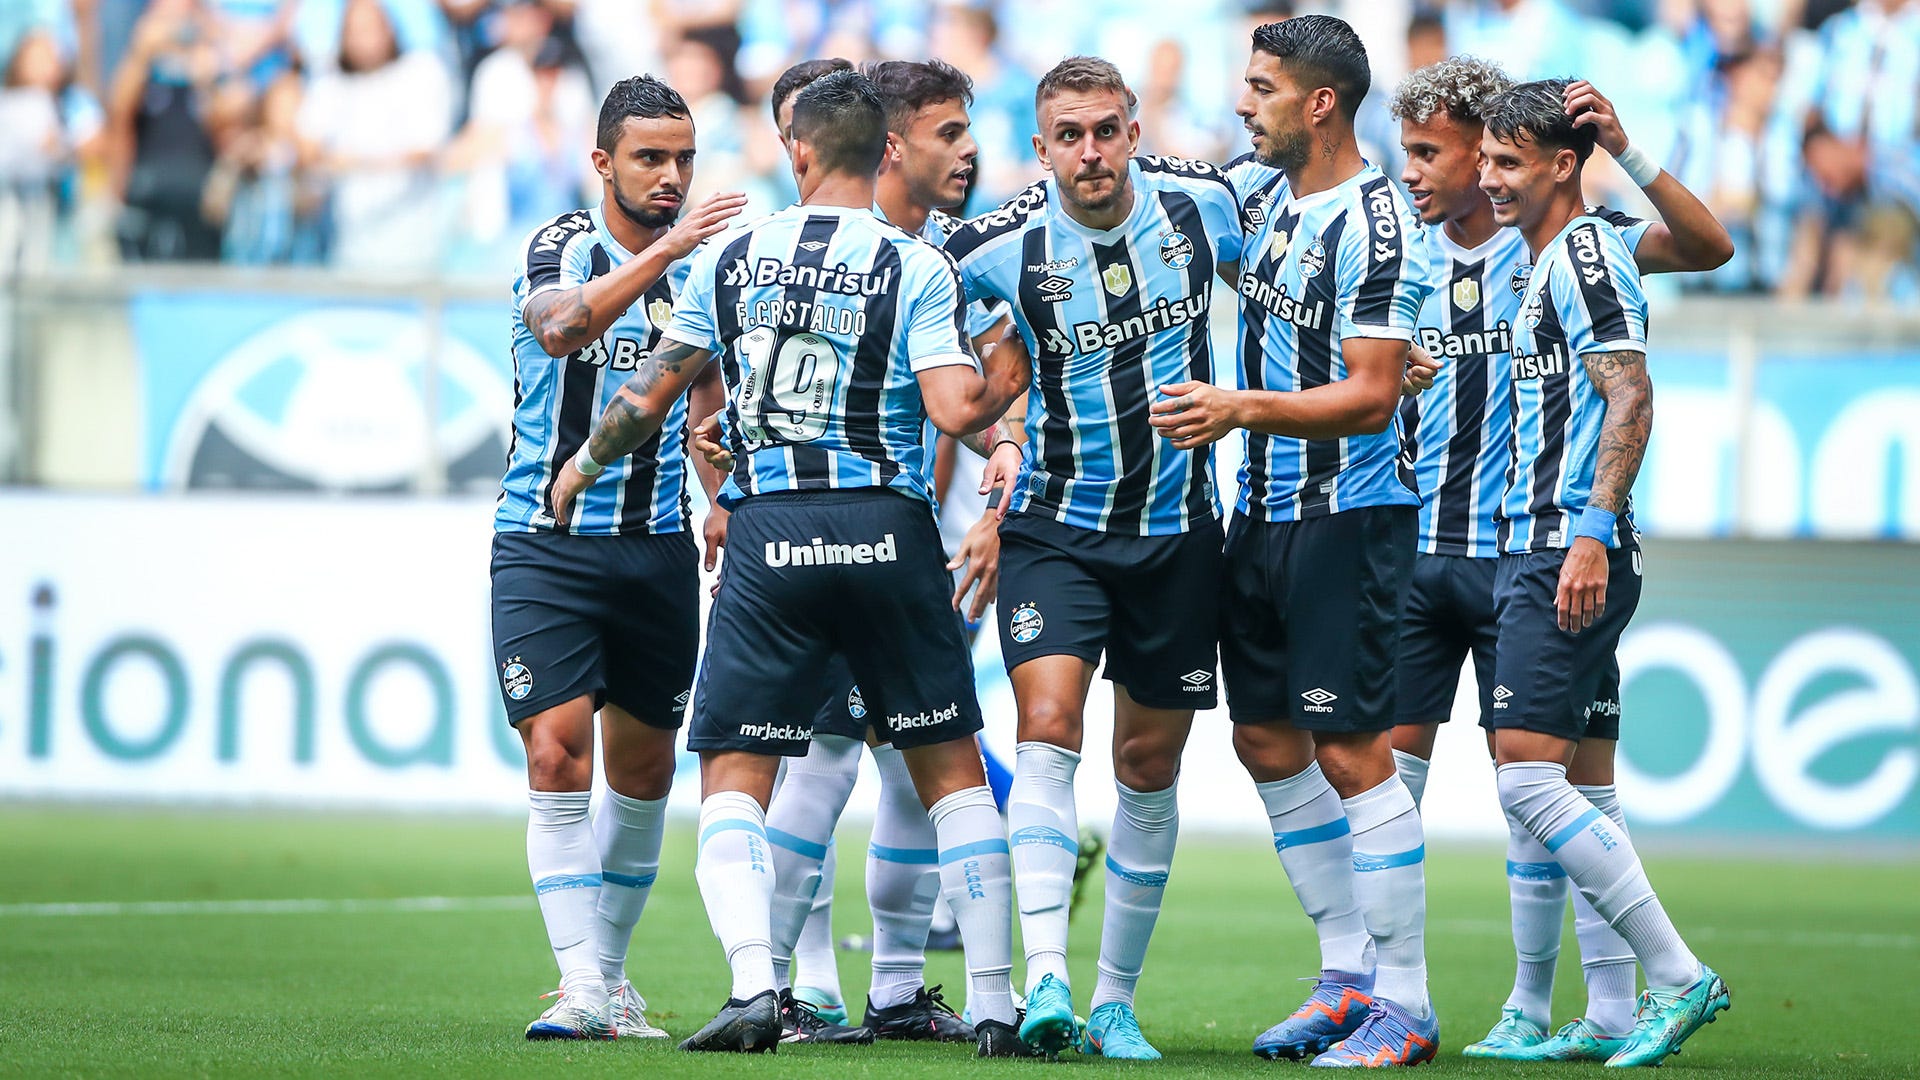 Grêmio vs Náutico: A Clash of Giants